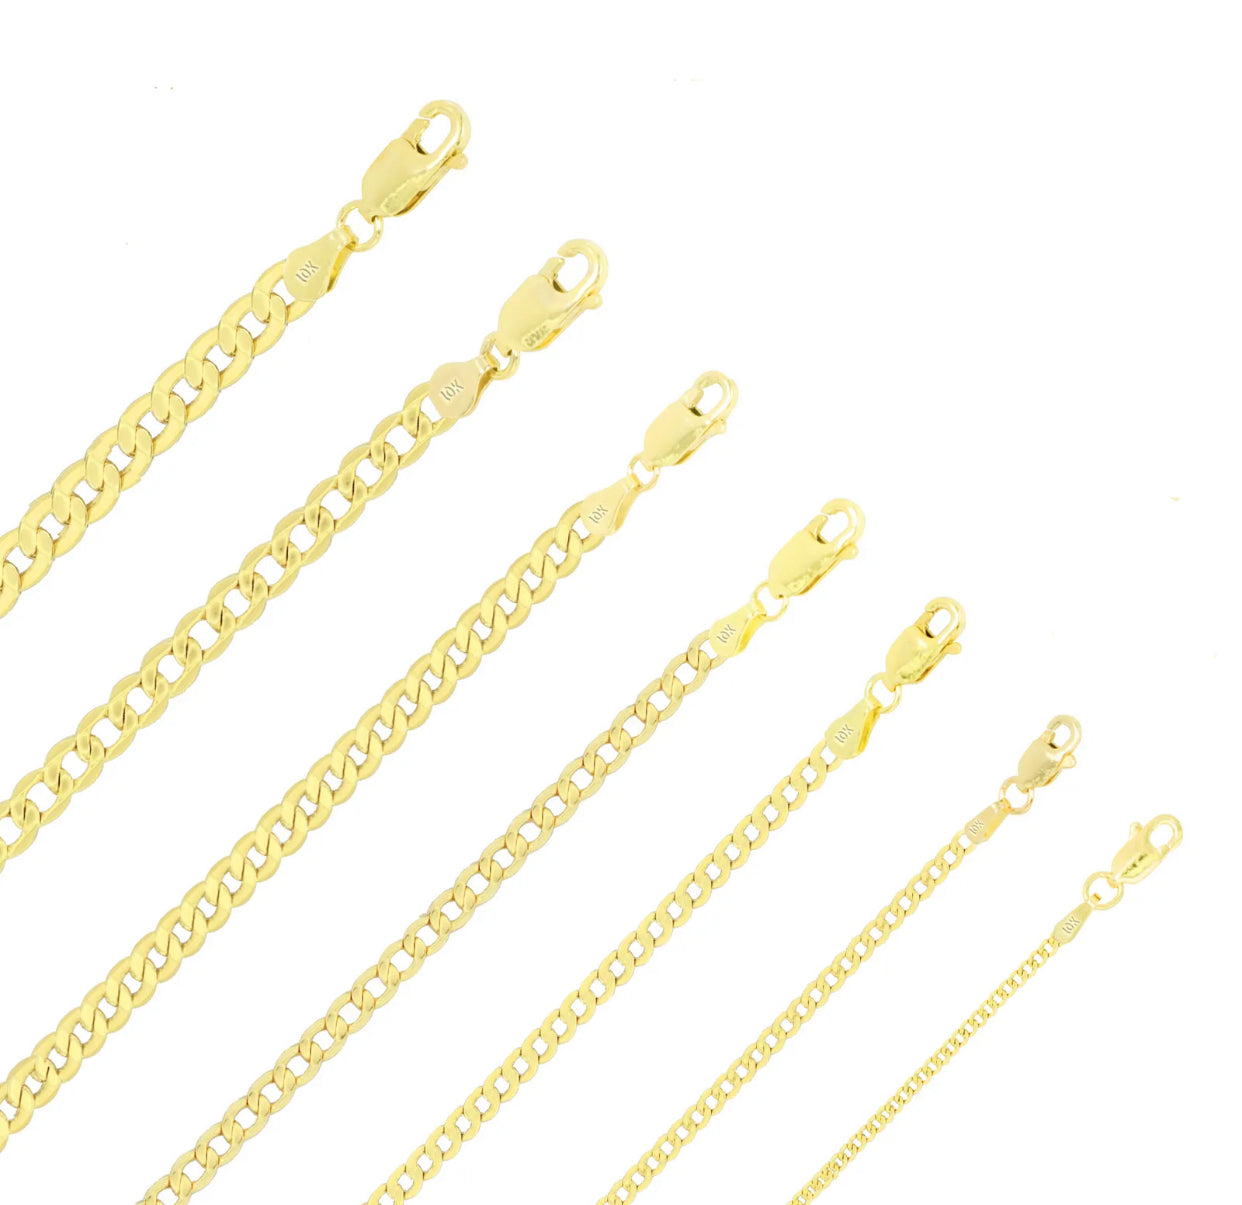 10K Yellow Gold 2mm-7mm Curb Cuban Chain Link Pendant Necklace Bracelet, 7"-30"